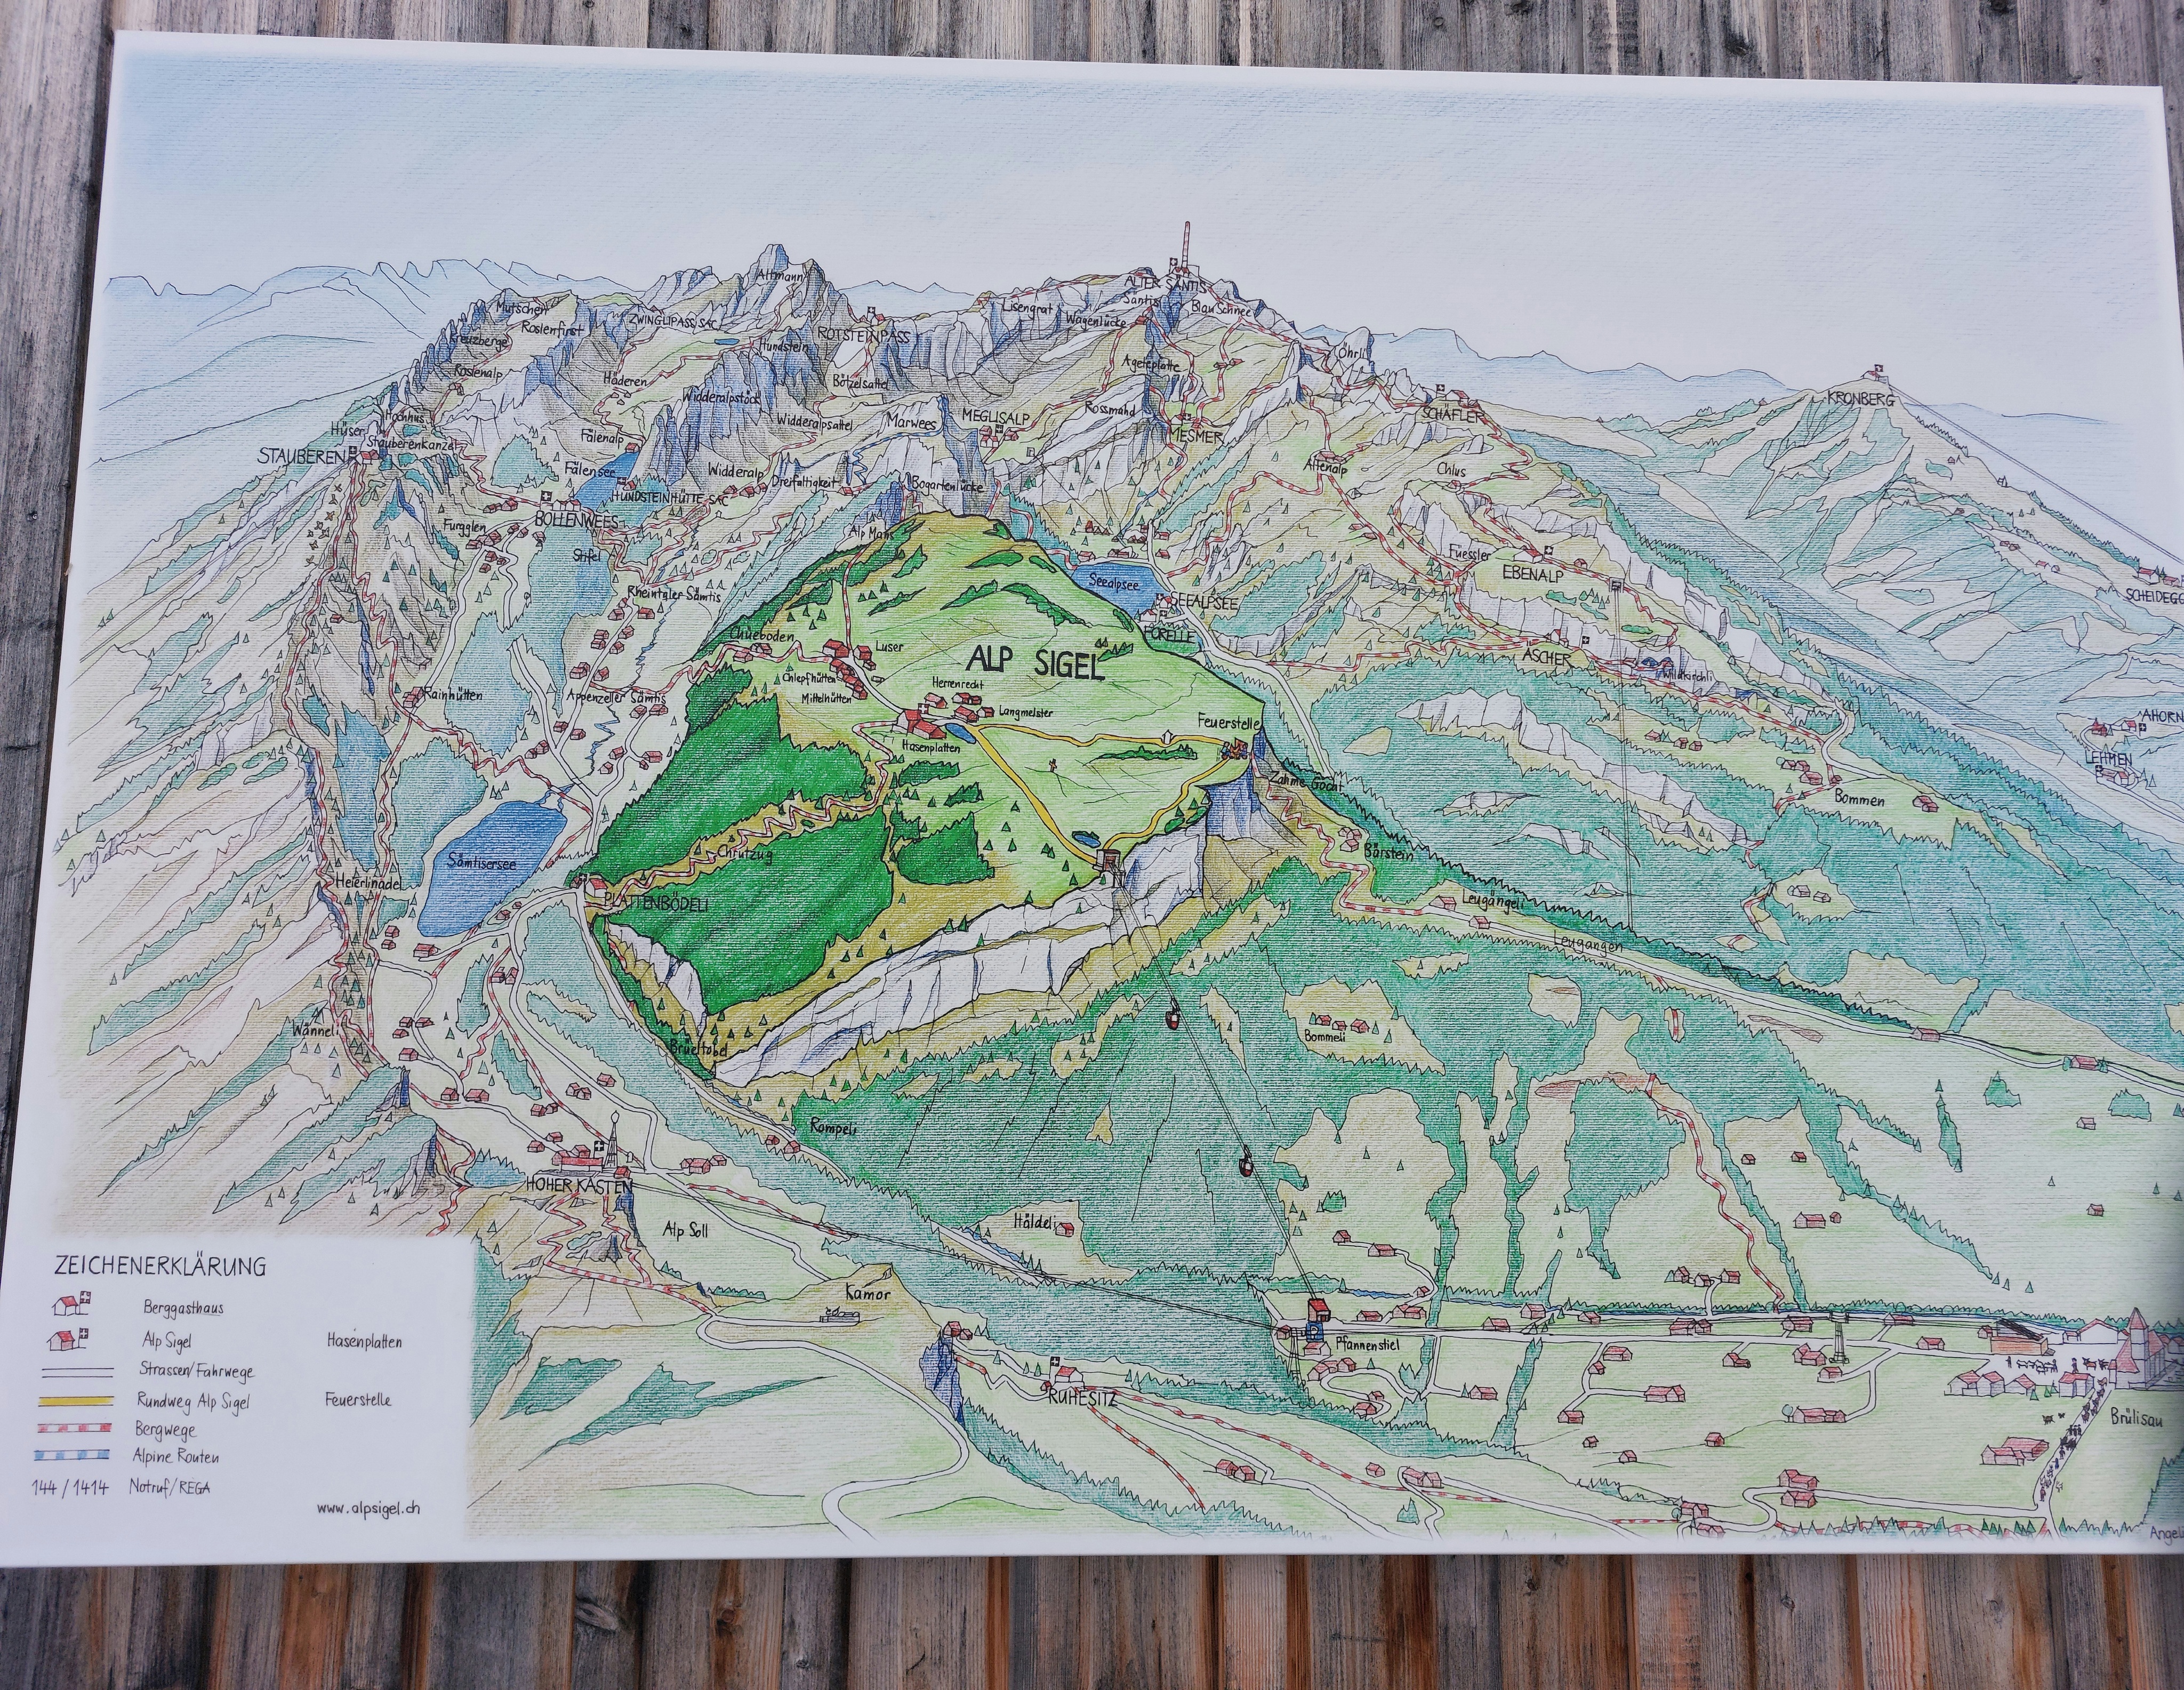 Map of Alpstein massif